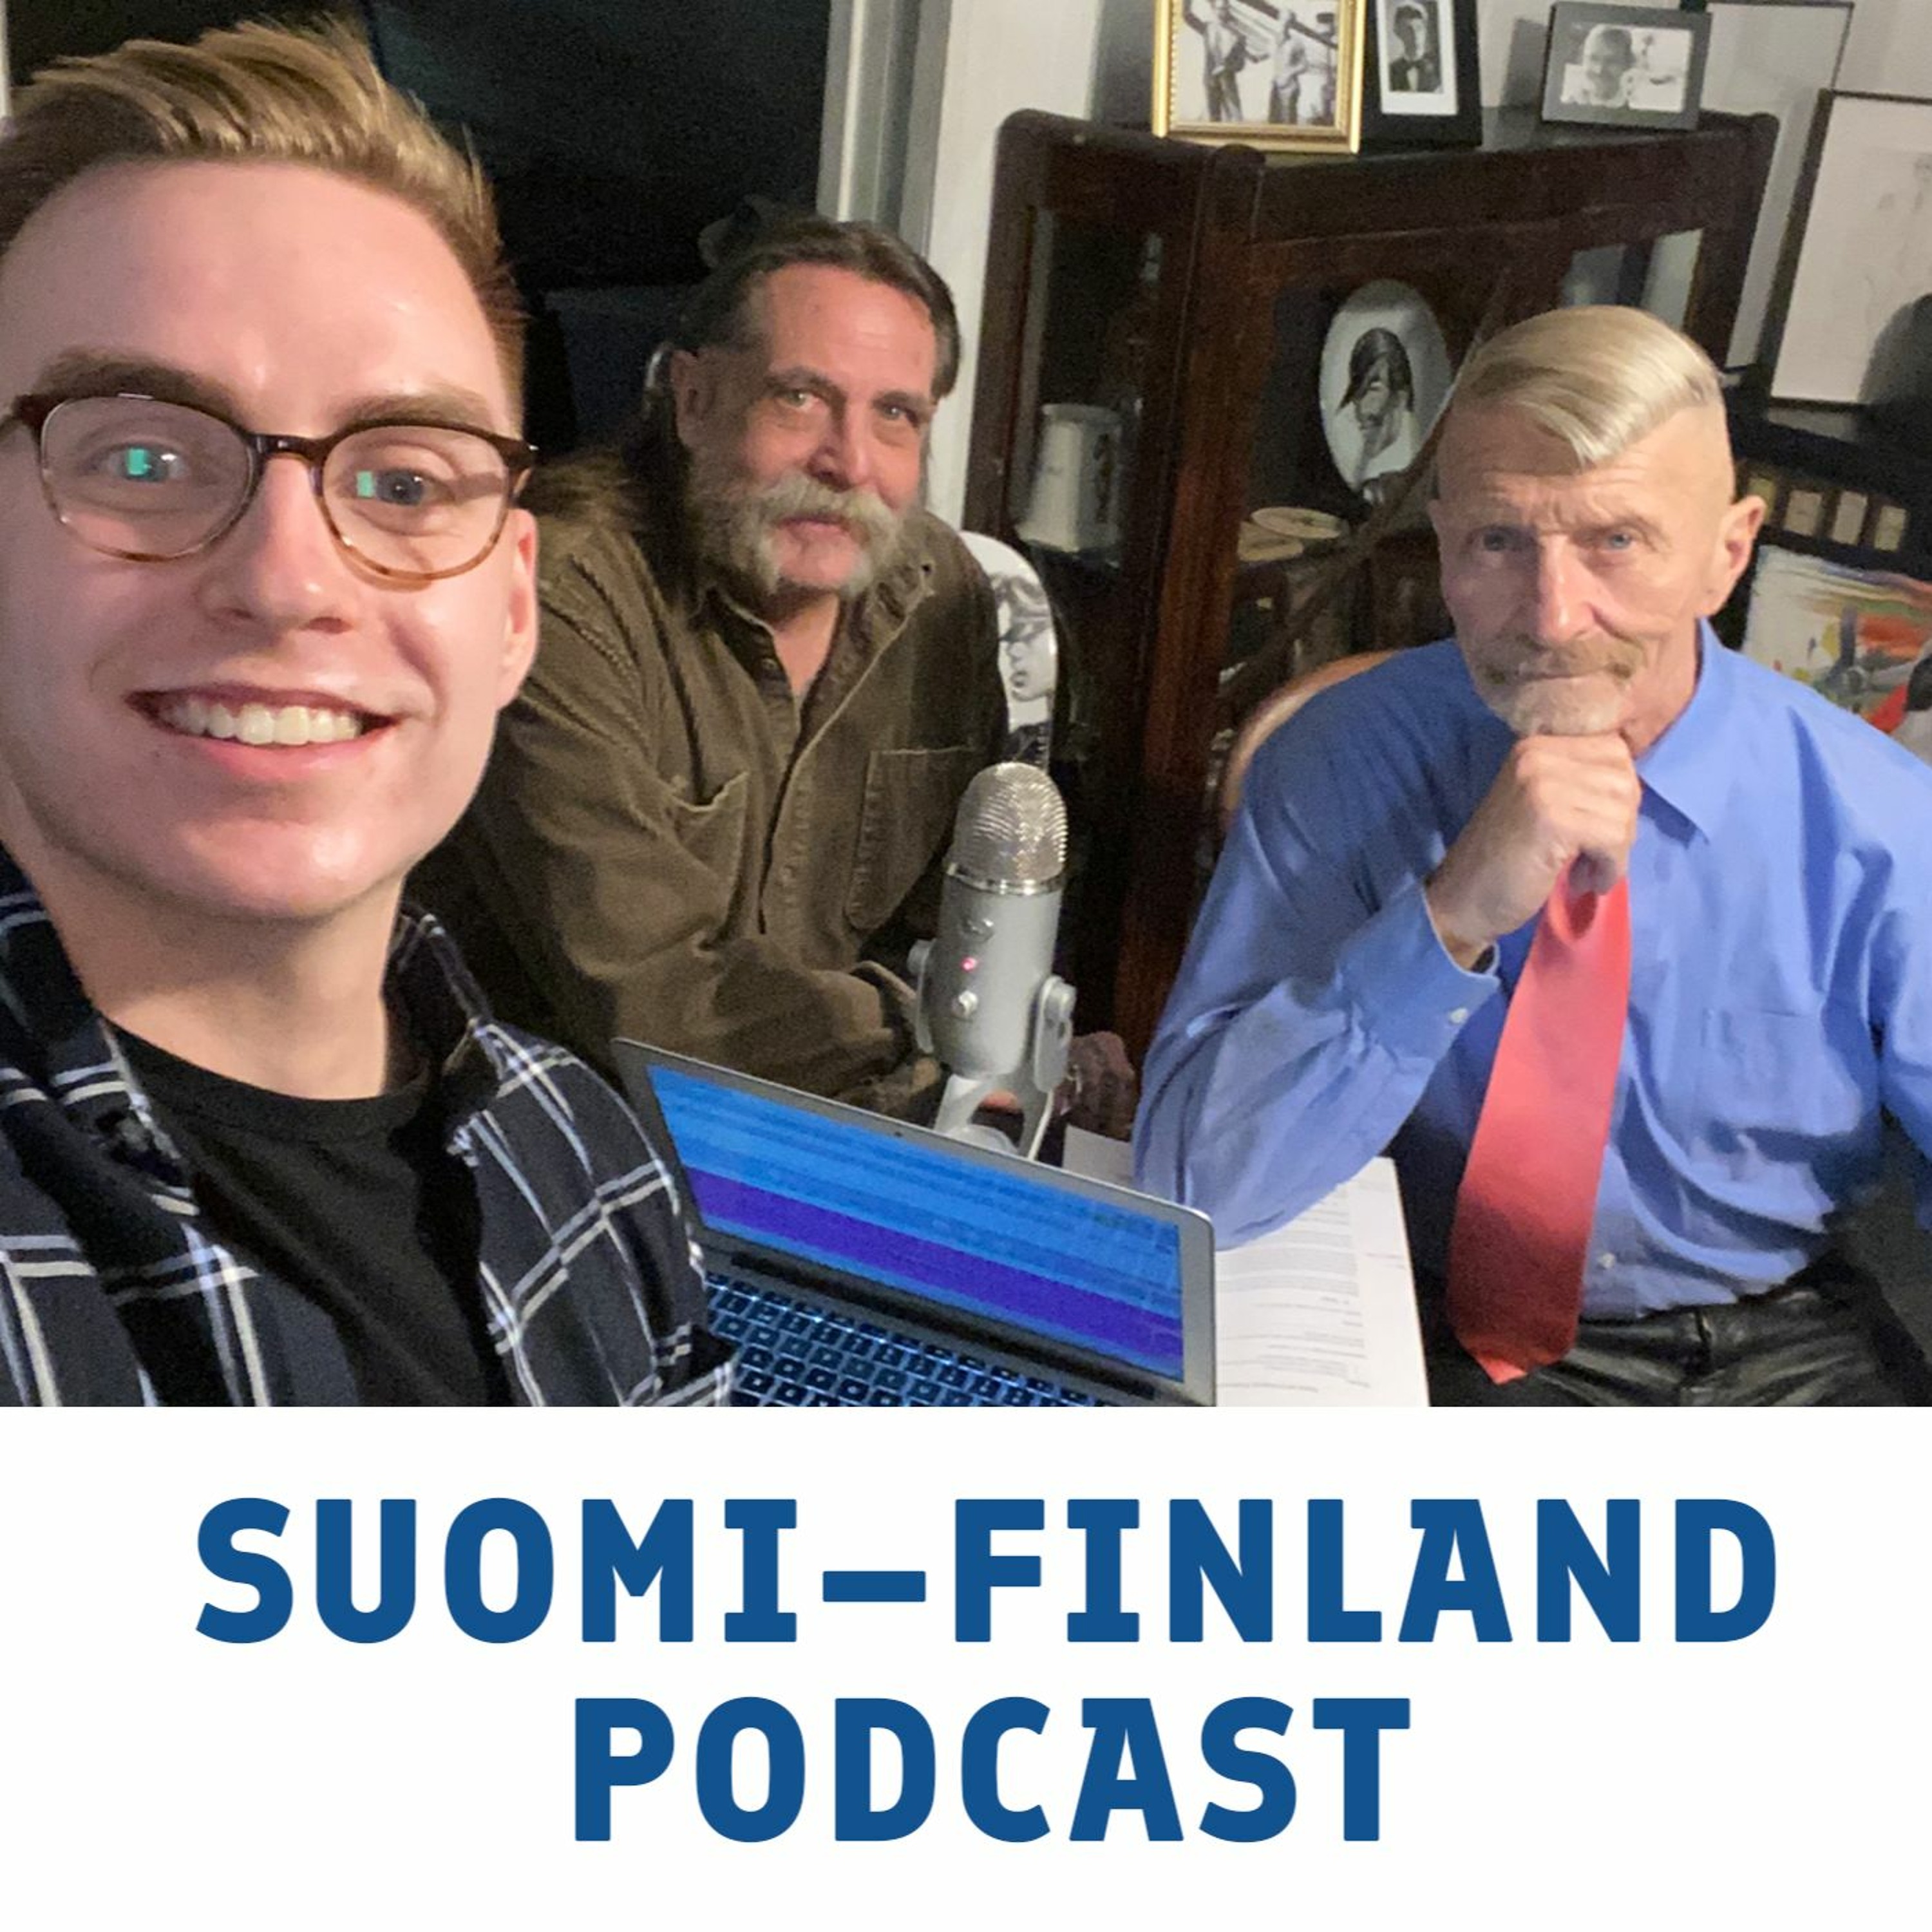 Tom of Finland 100 Years – Celebrating the Internationally Renowned Finnish Artist and Liberator